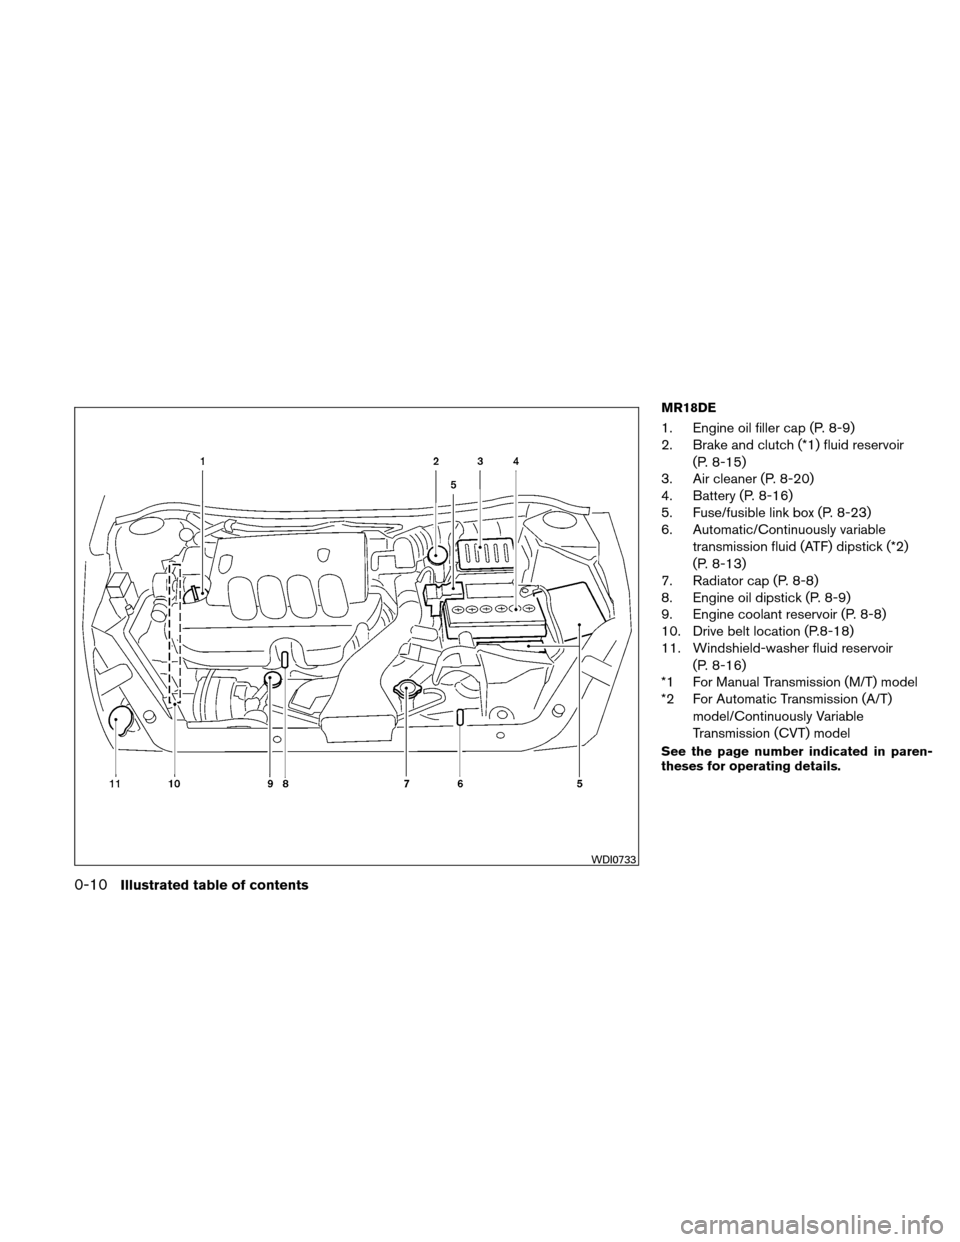 NISSAN VERSA HATCHBACK 2010 1.G User Guide MR18DE
1. Engine oil filler cap (P. 8-9)
2. Brake and clutch (*1) fluid reservoir(P. 8-15)
3. Air cleaner (P. 8-20)
4. Battery (P. 8-16)
5. Fuse/fusible link box (P. 8-23)
6. Automatic/Continuously va